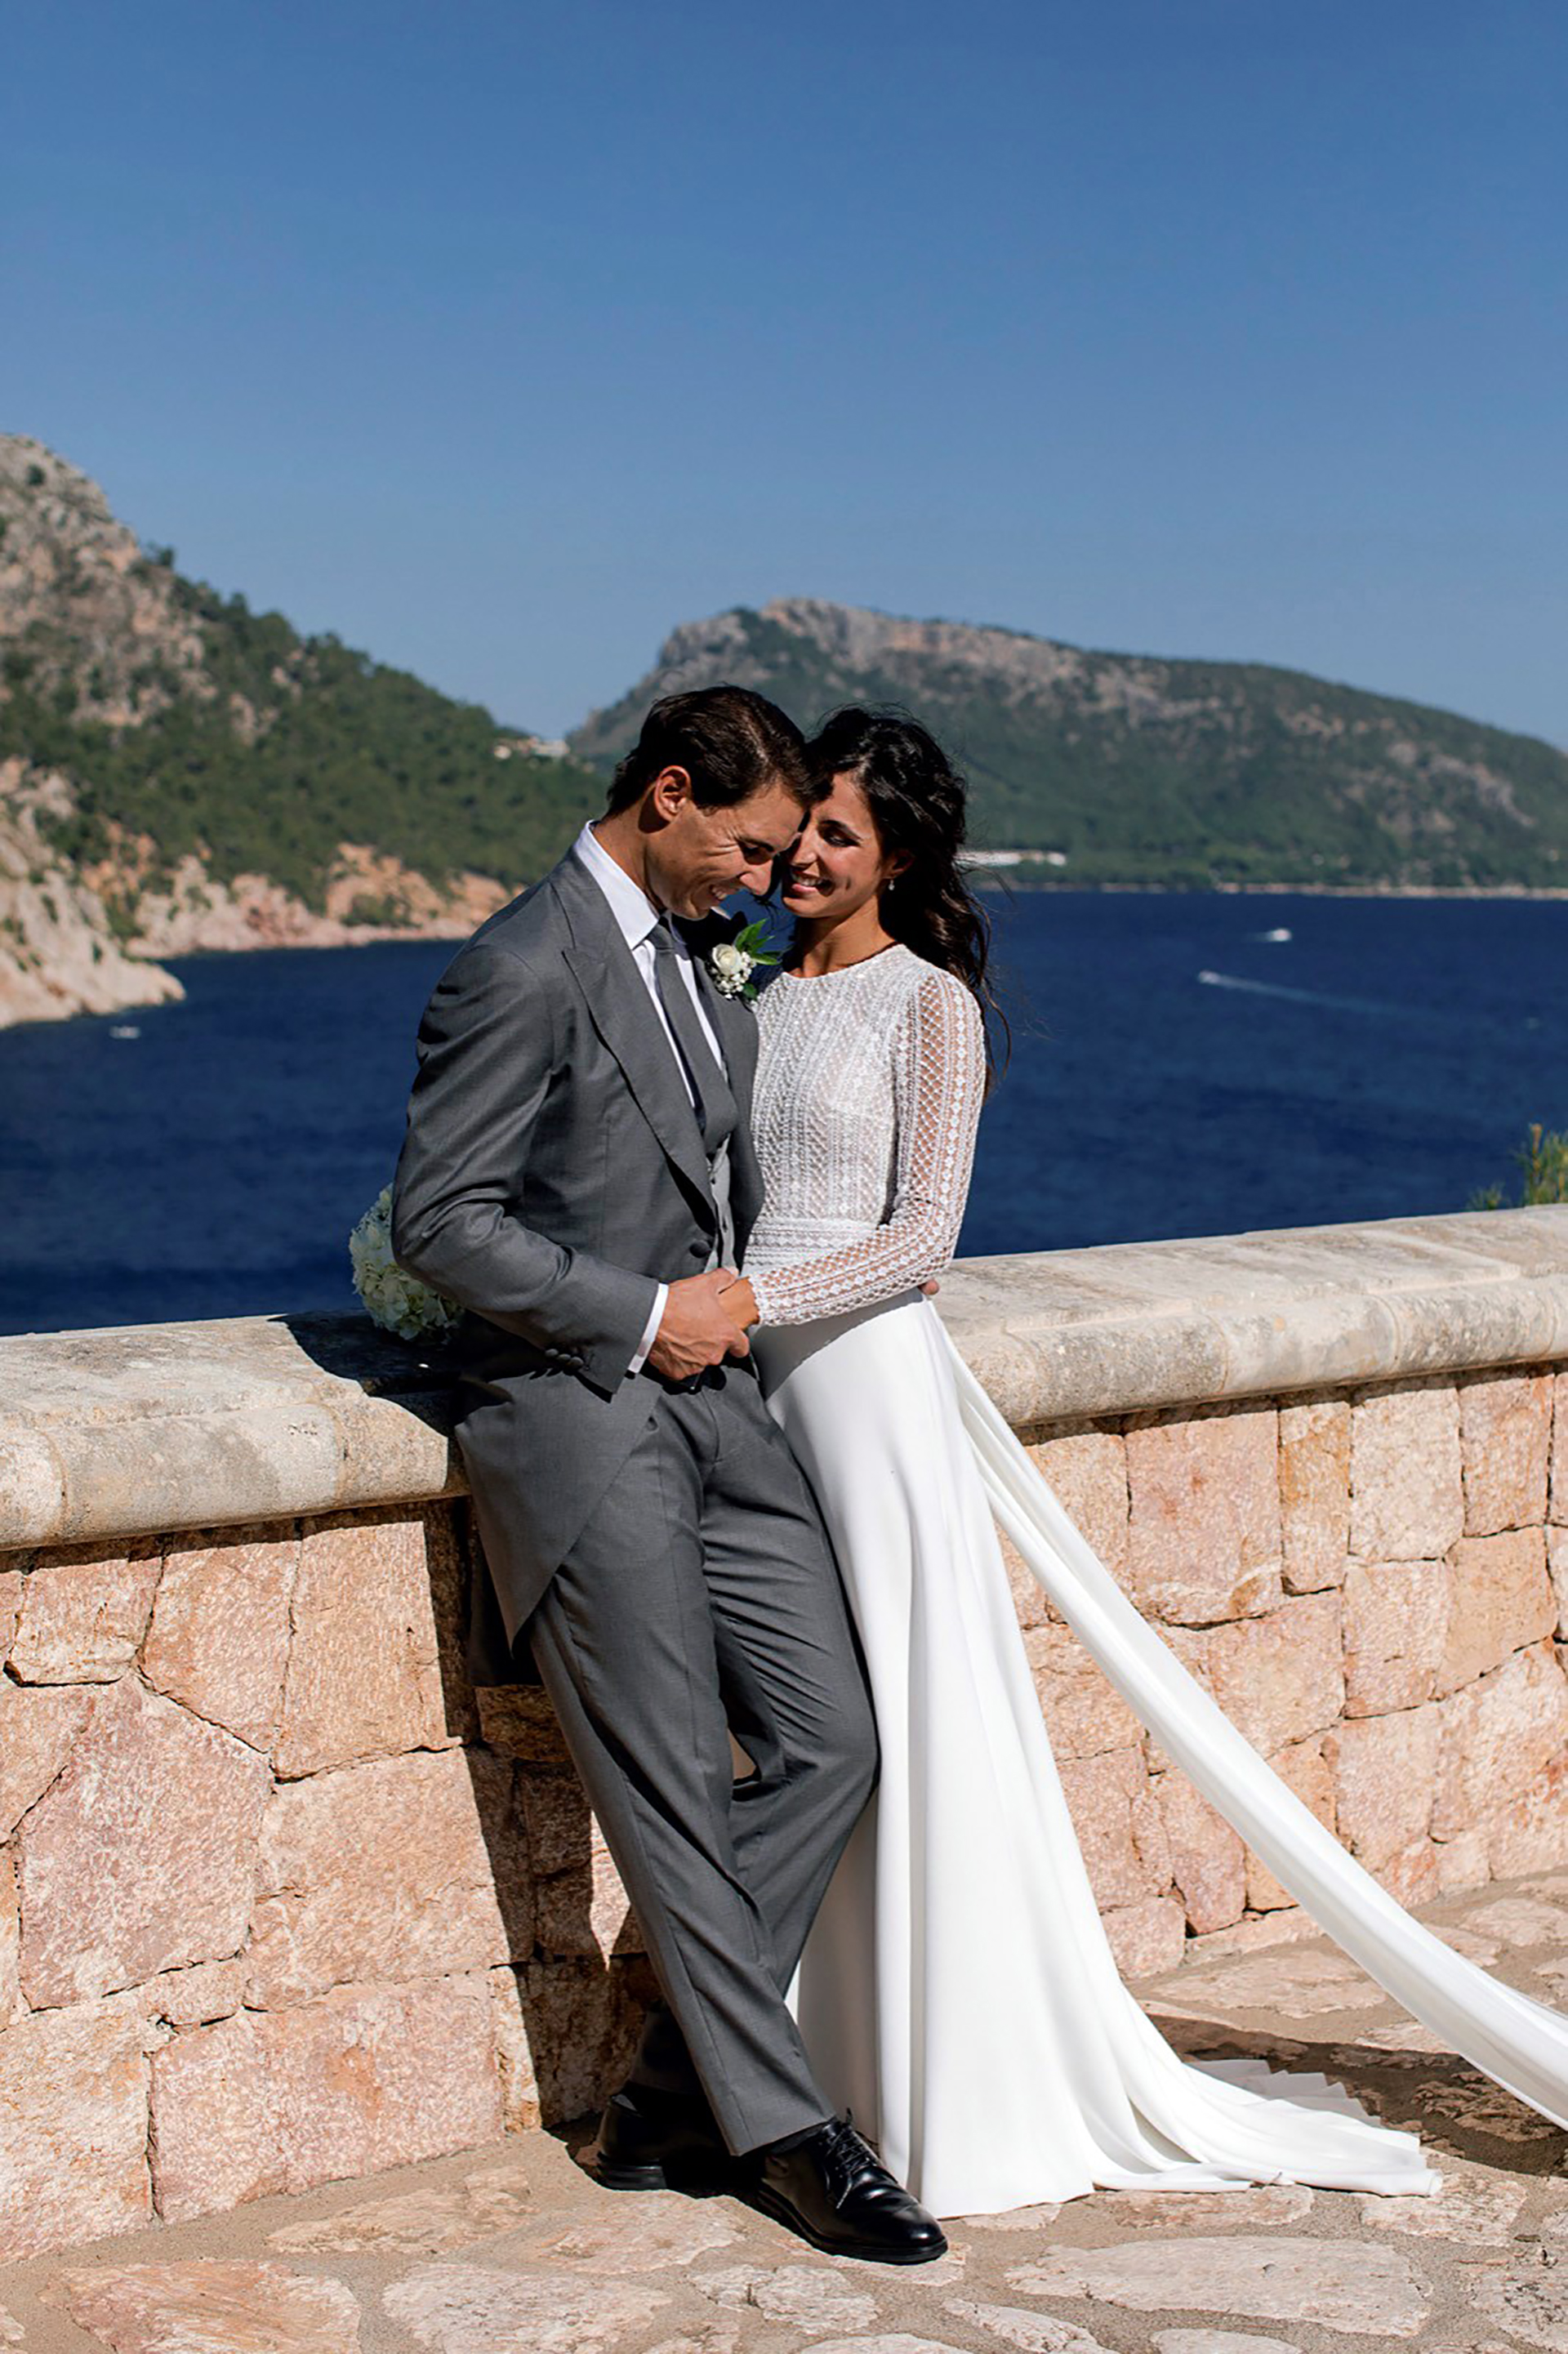 La pareja se casó en 2019 en un castillo de Mallorca (Foto: EFE)